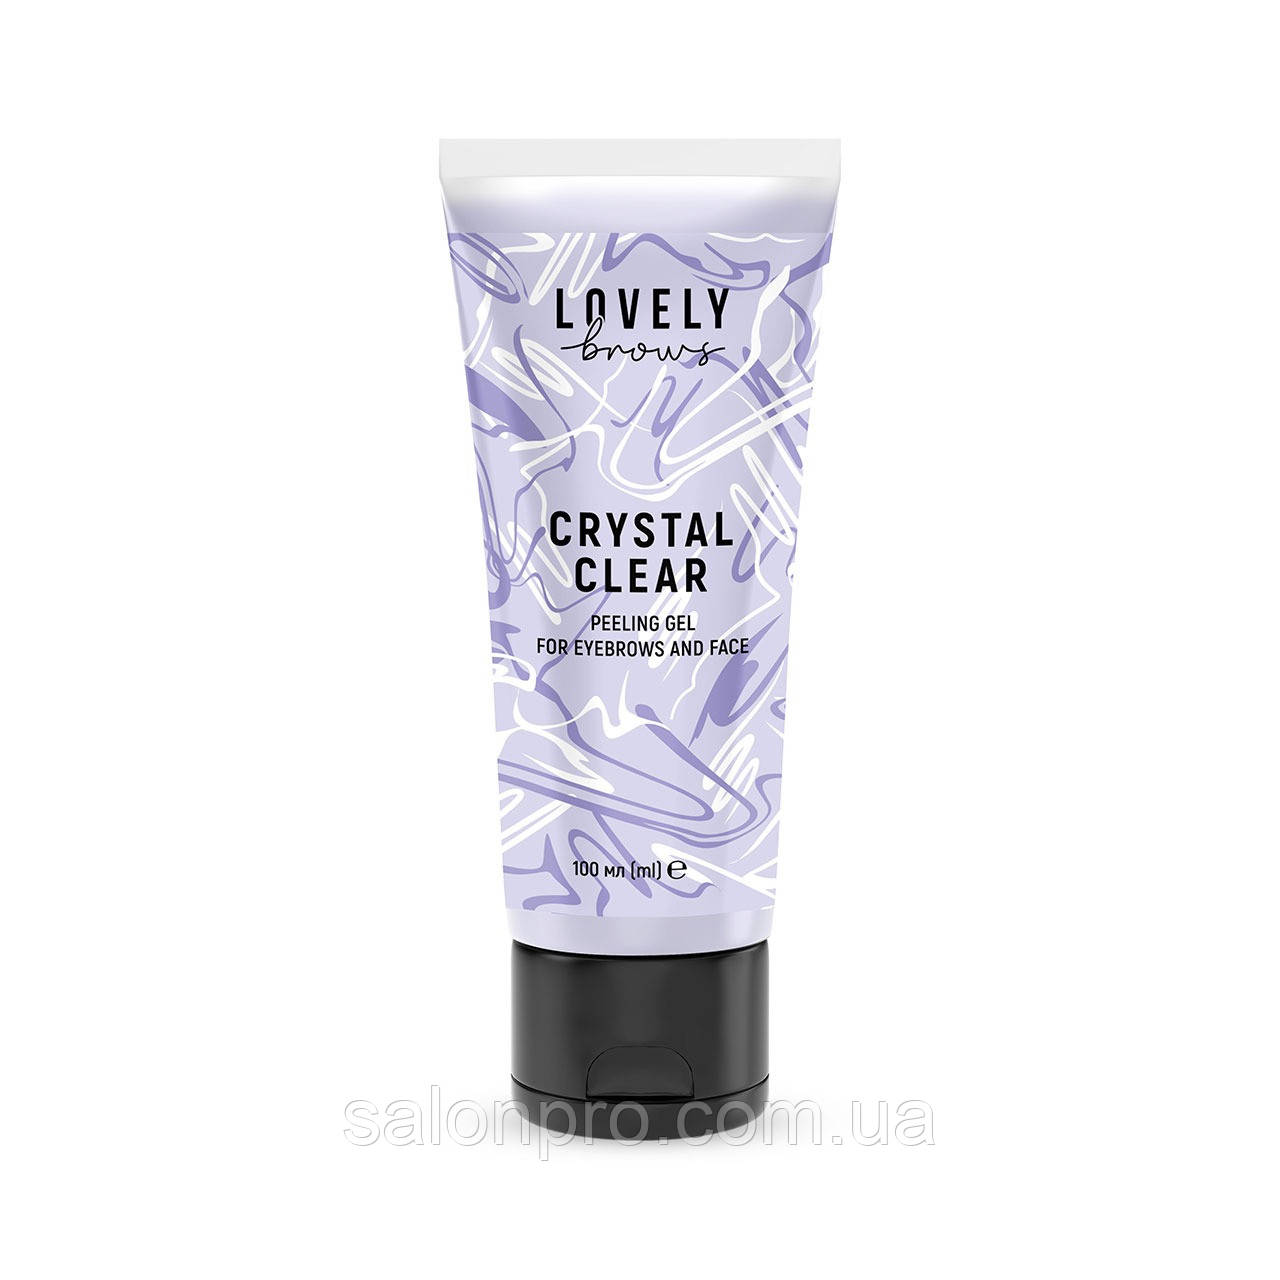 Lovely Brows Crystal Clear Peeling Gel - пілінг-скатка для брів та обличчя, 100 мл